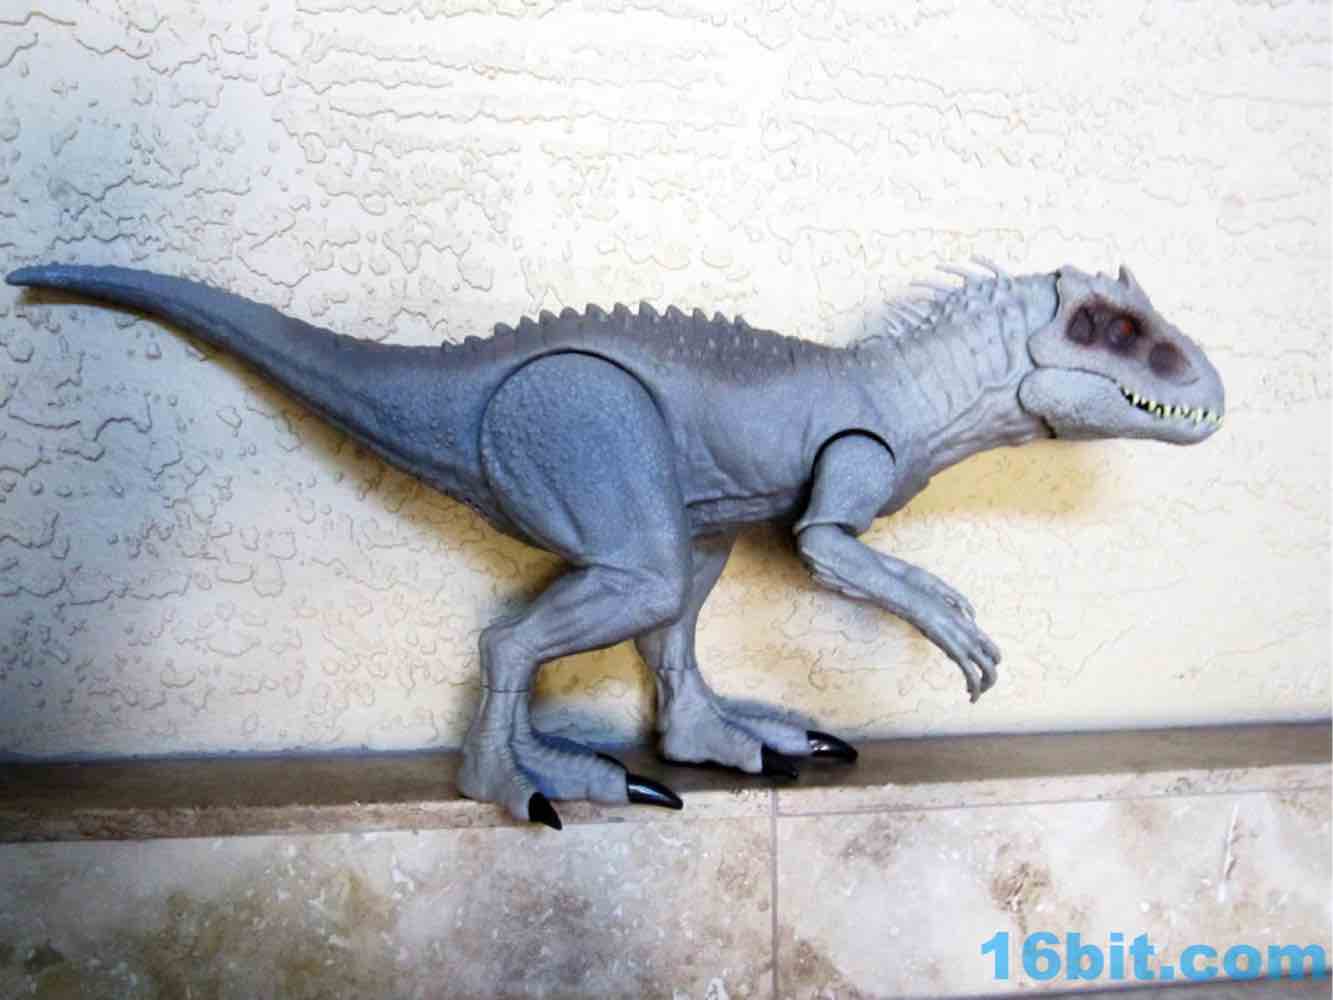 jurassic world dino hybrid indominus rex action figure